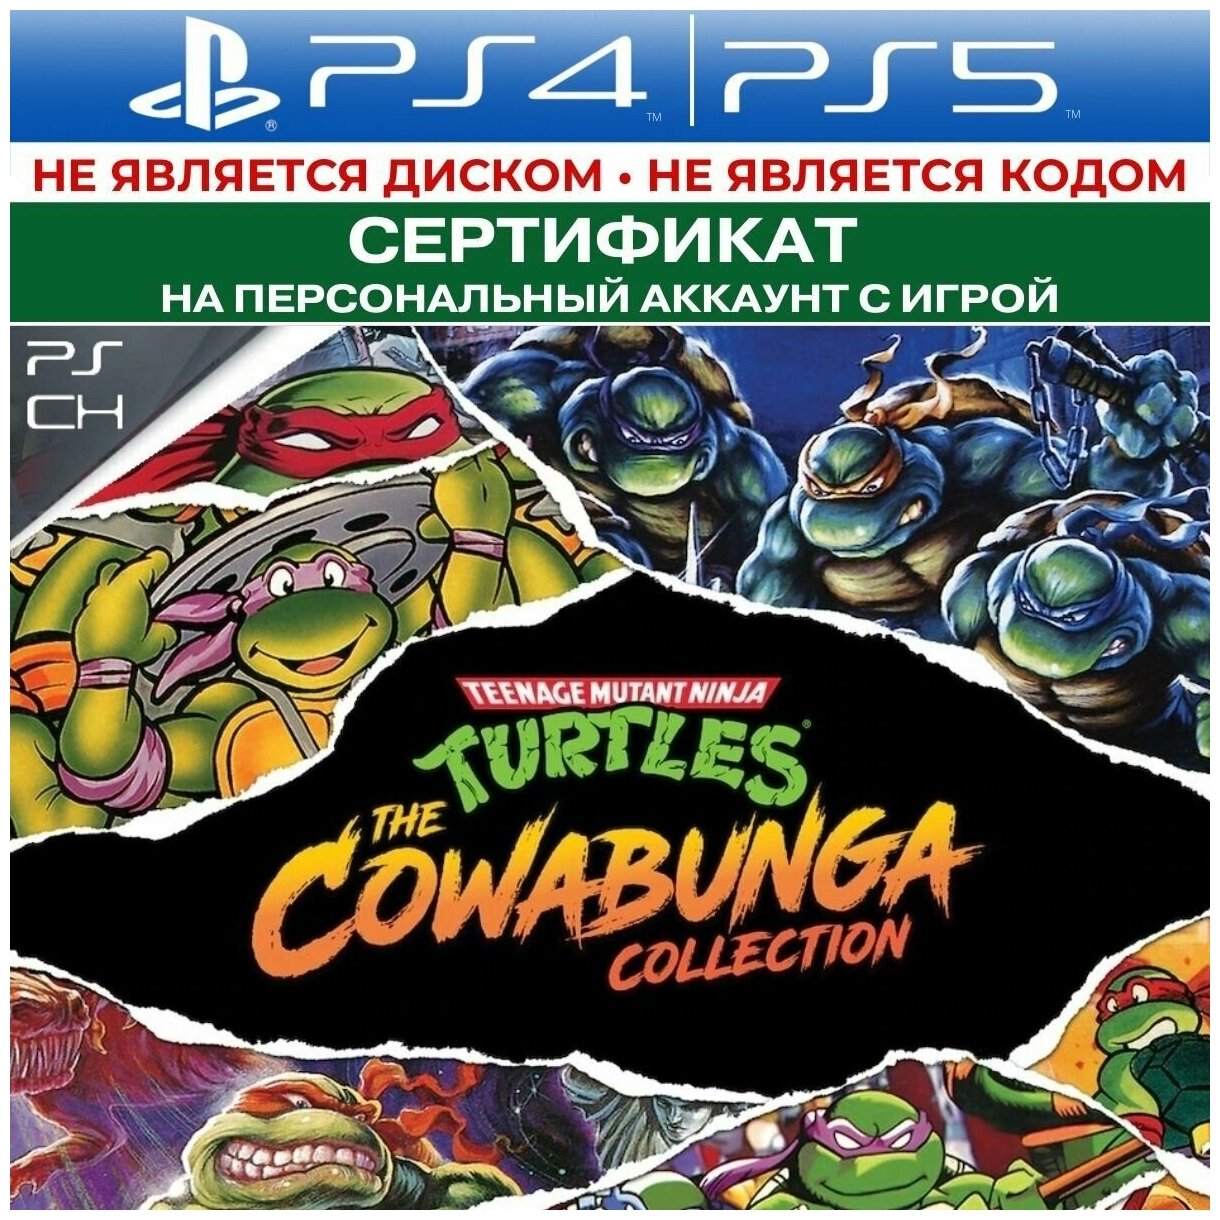 Teenage mutant ninja turtles the cowabunga collection купить steam фото 33